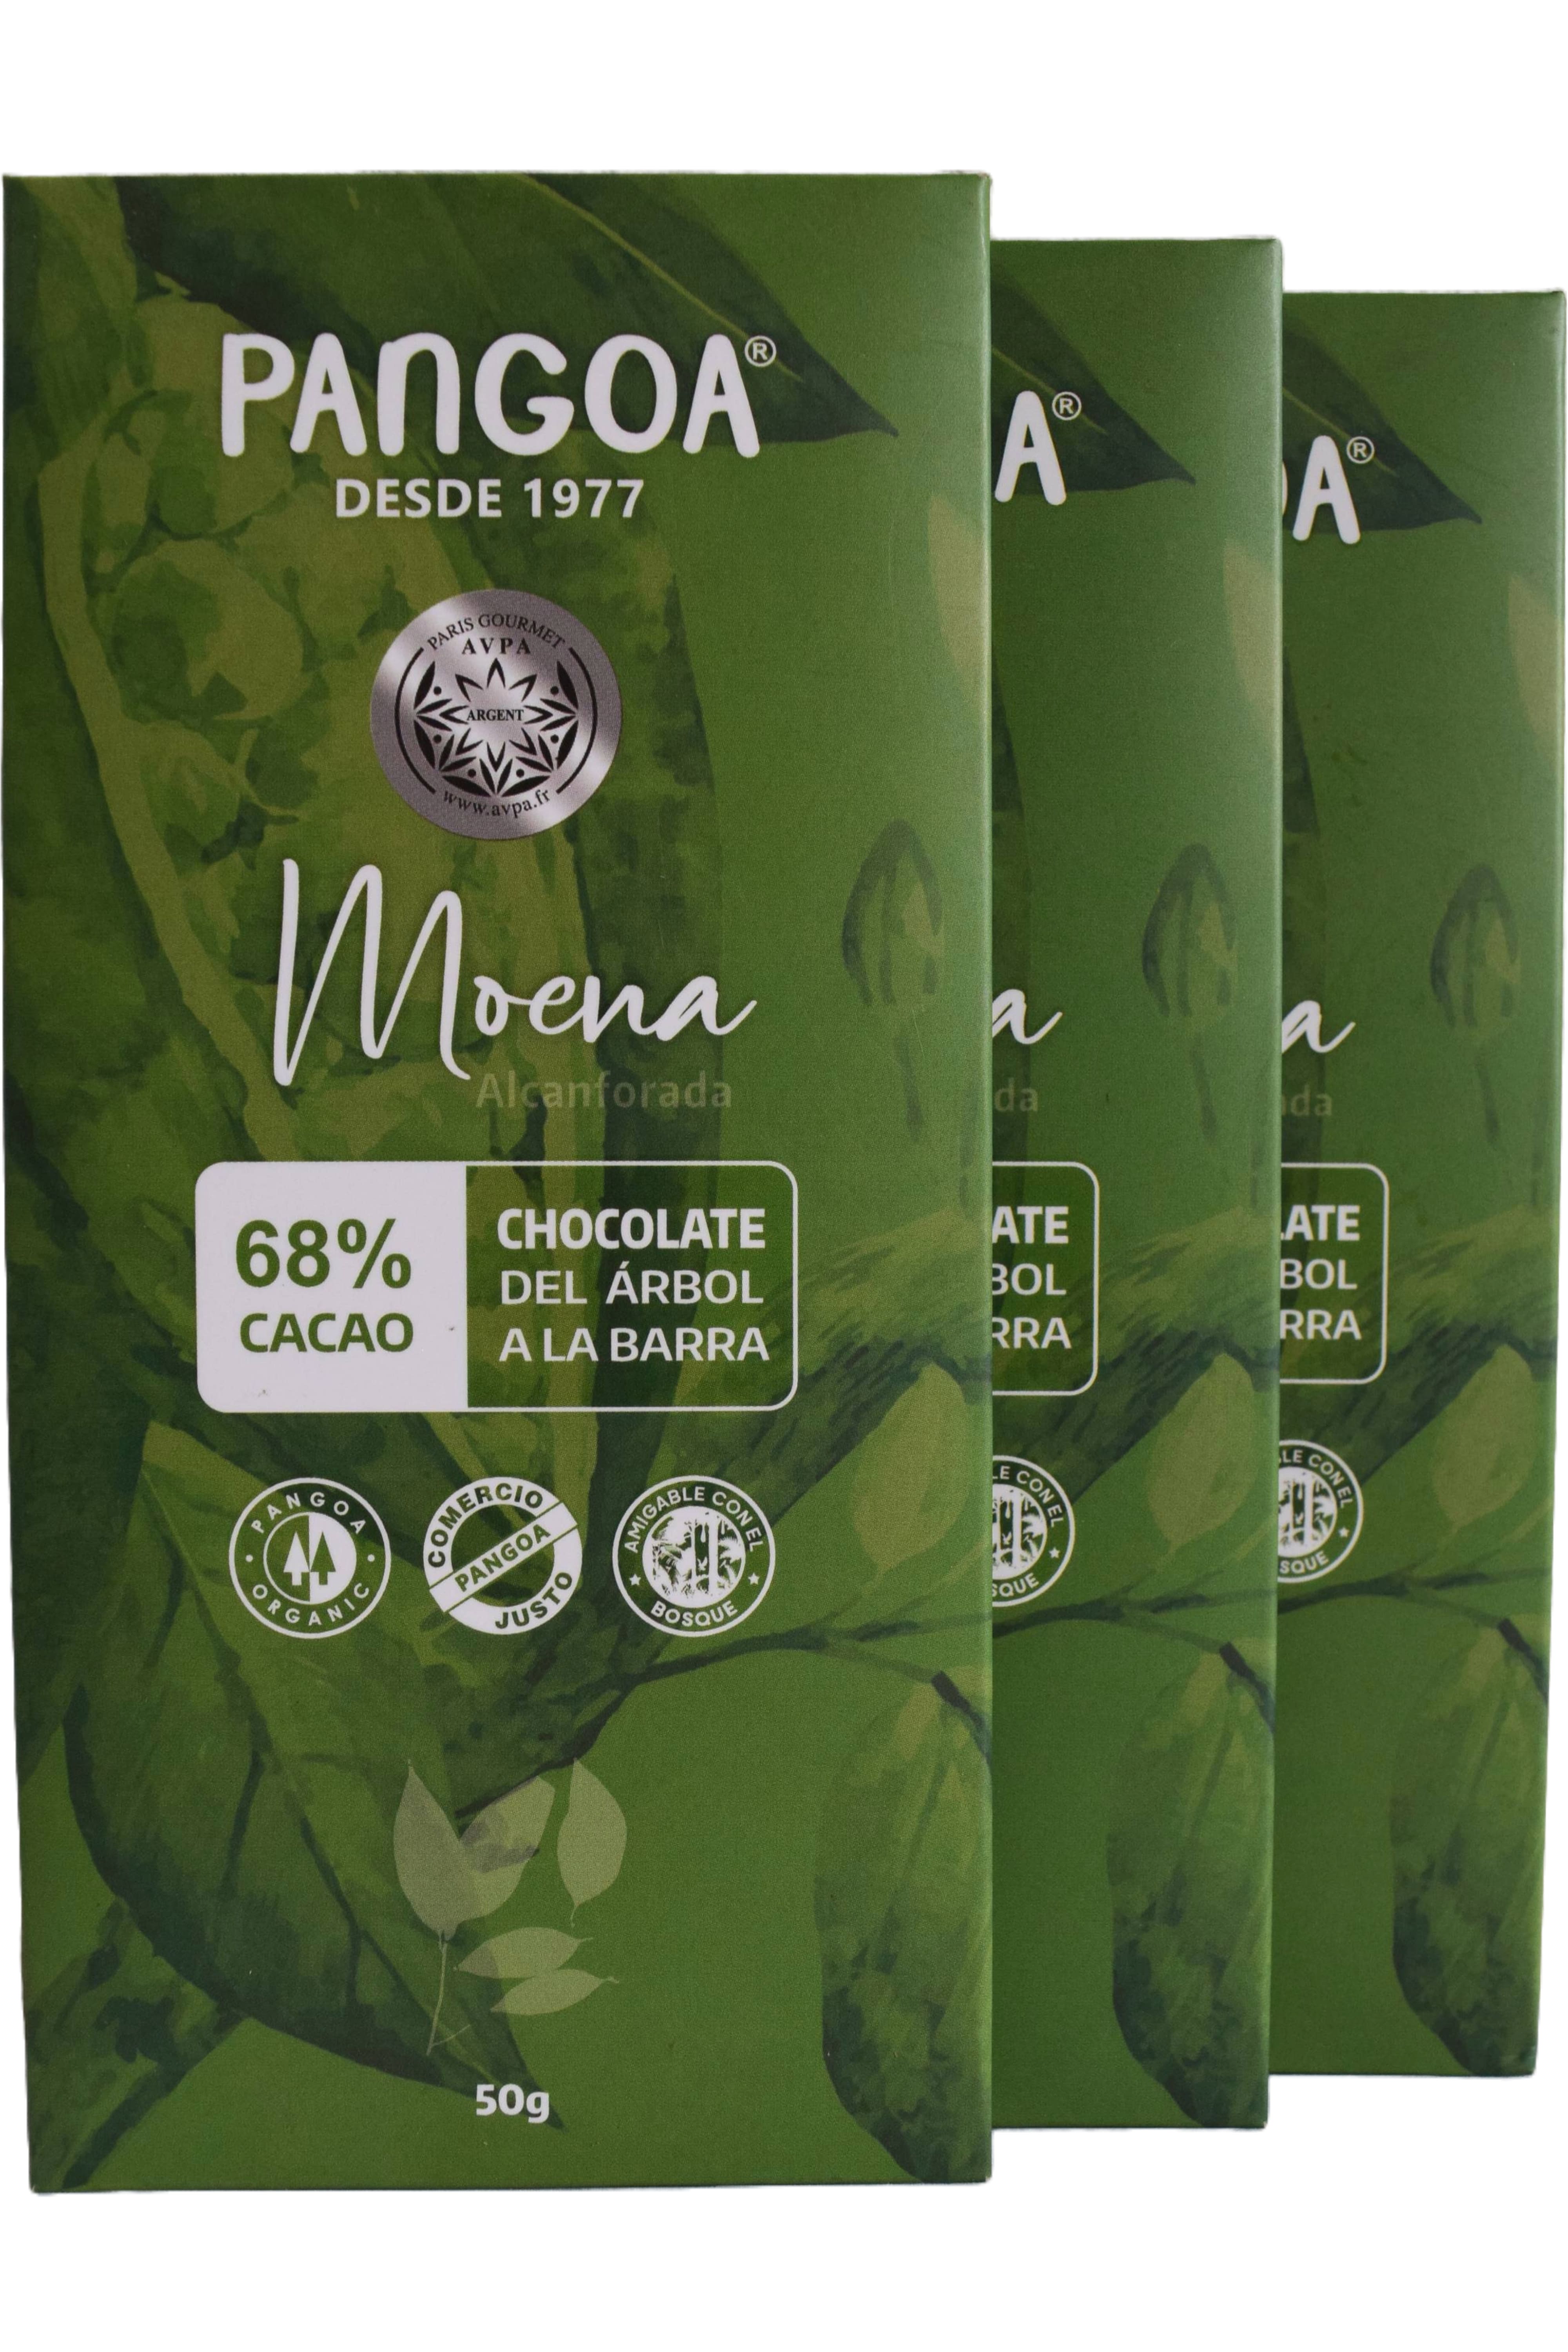 Producto RelacionadoMoena Alcanforada Chocolate 68% Cacao